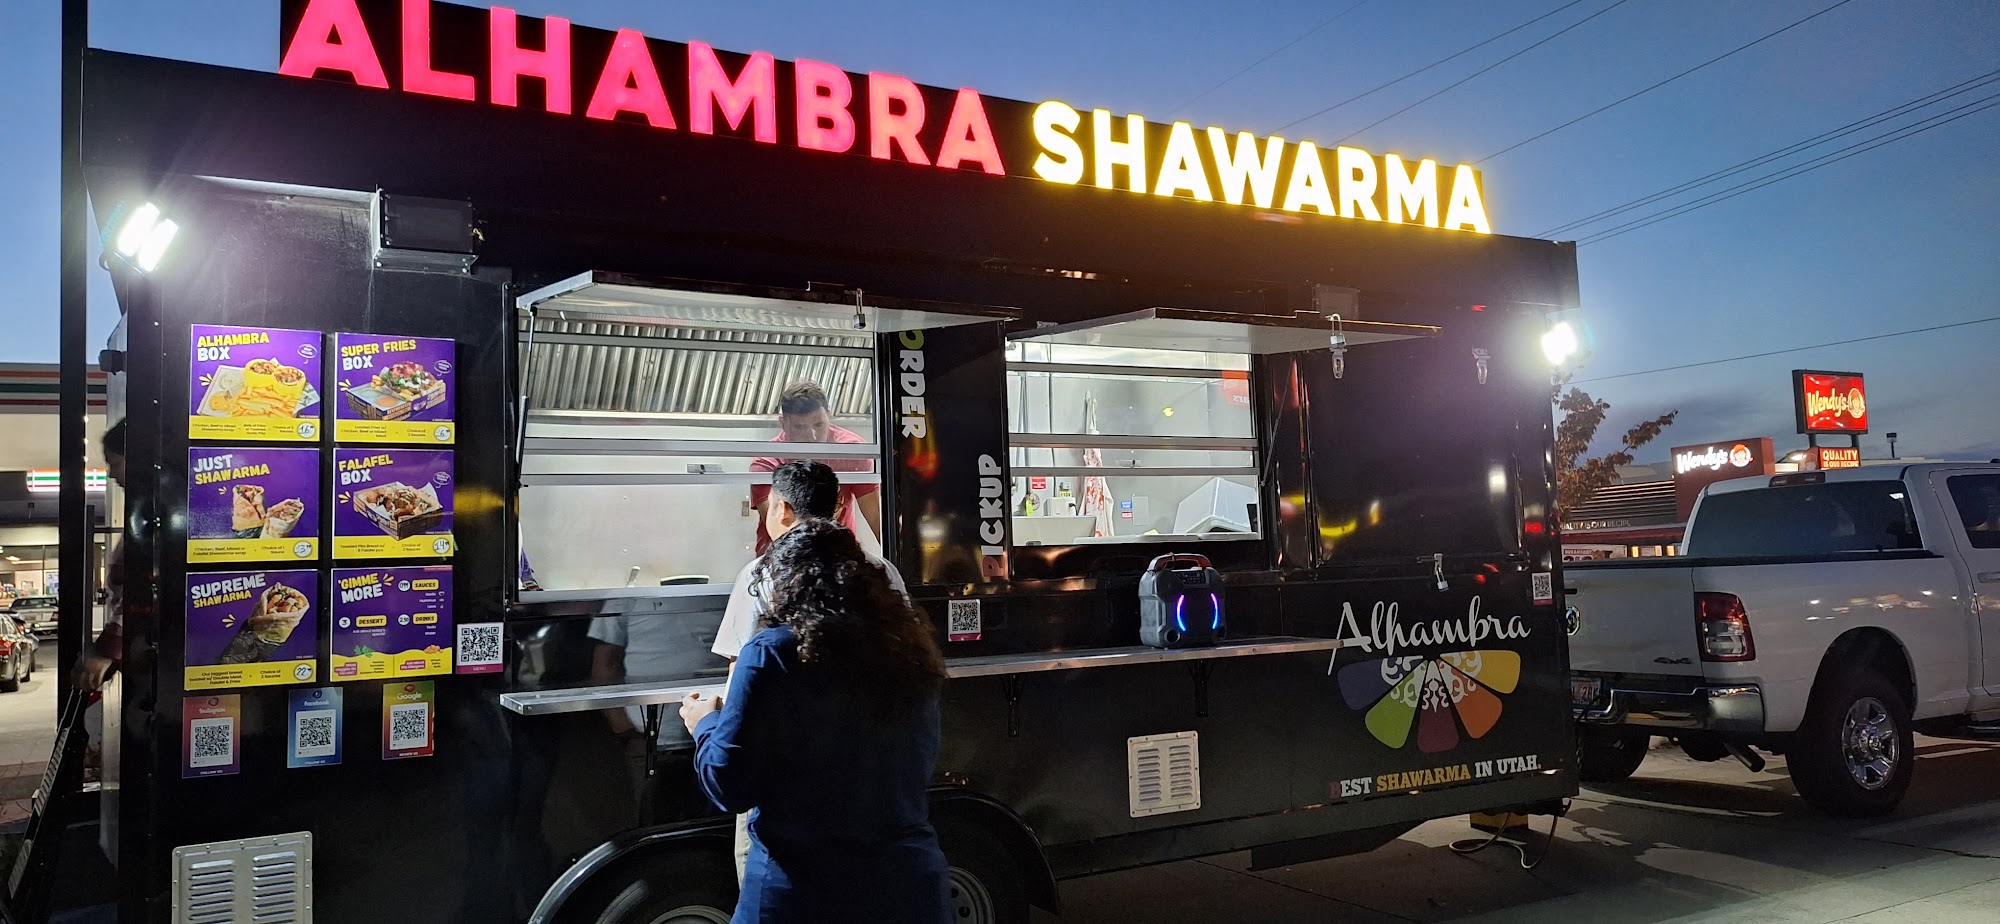 Alhambra Shawarma